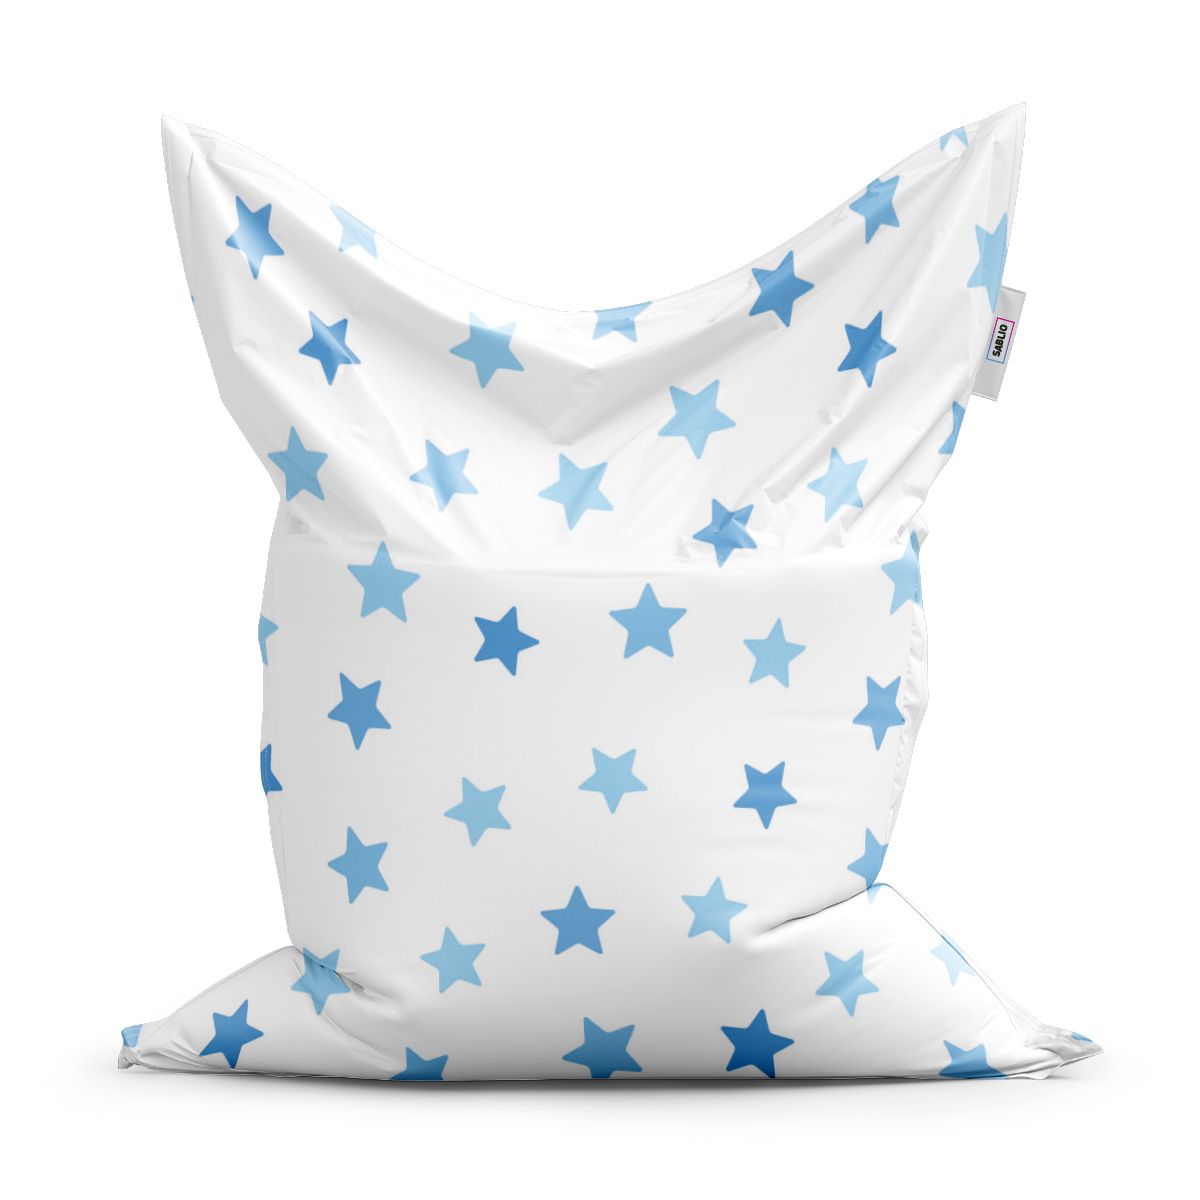 Sedací vak SABLIO - Modré hvězdy na bílé 150x100 cm - E-shop Sablo s.r.o.